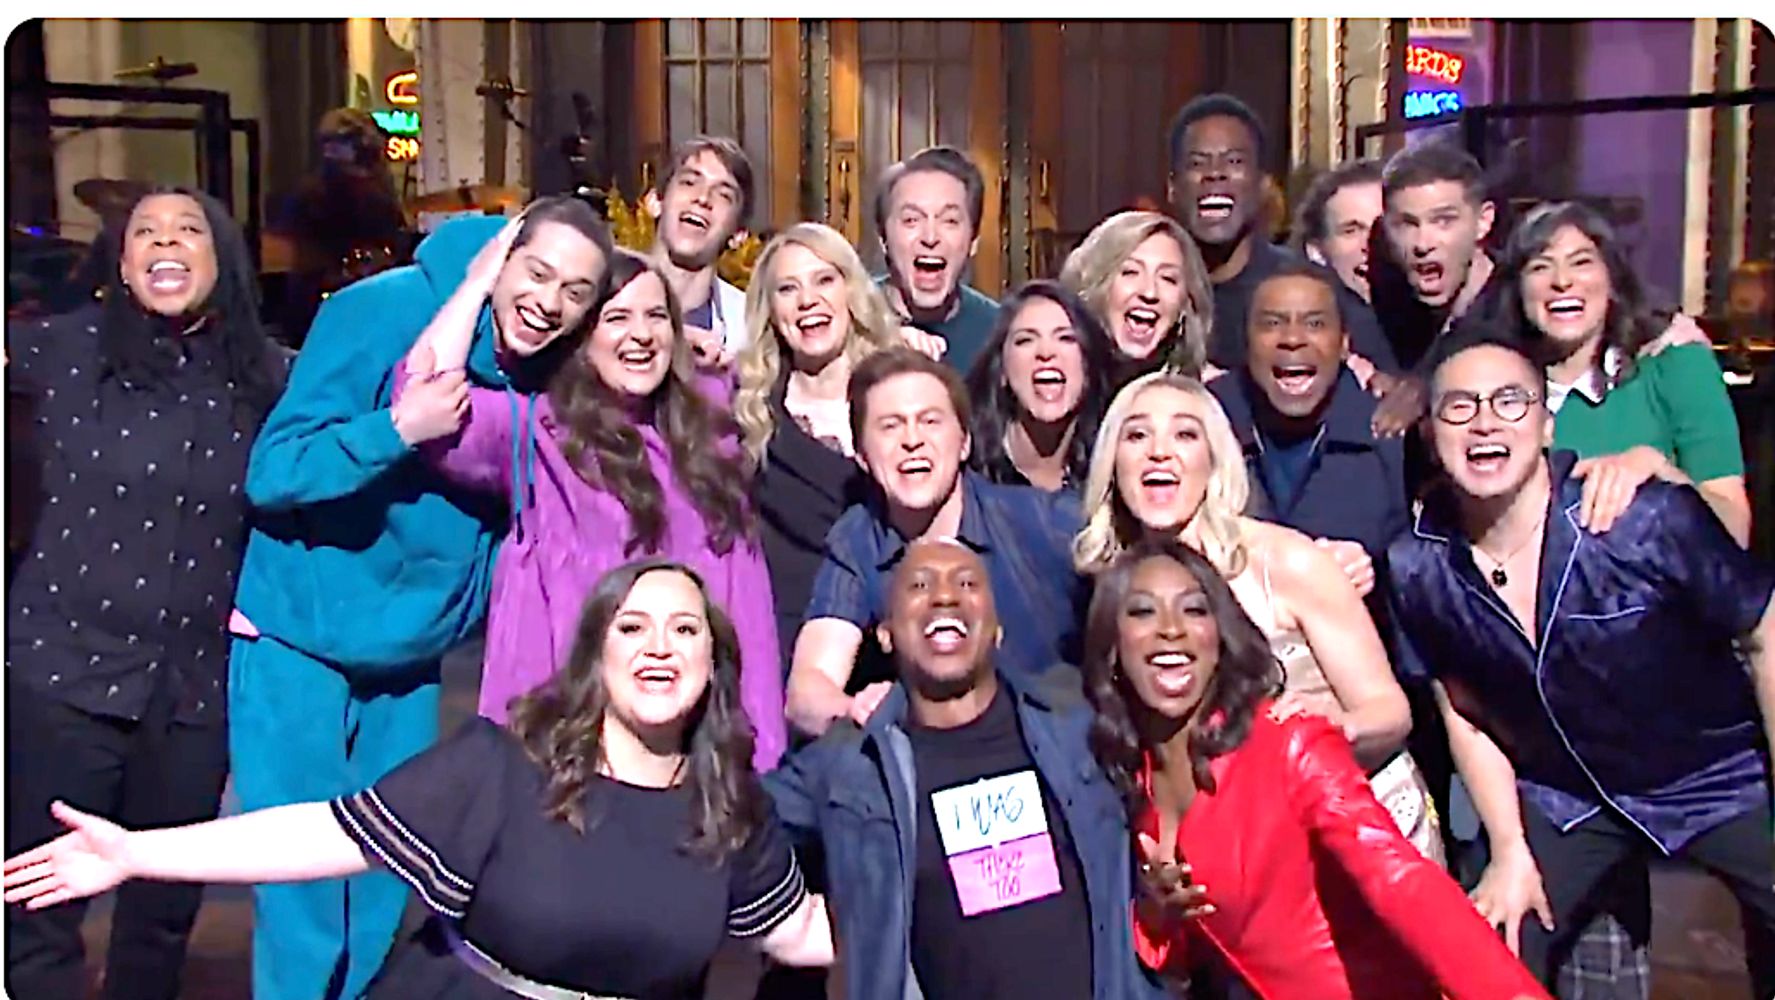 'Saturday Night Live' Cast Bids Poignant Farewell After 'Crazy' Season HuffPost Entertainment